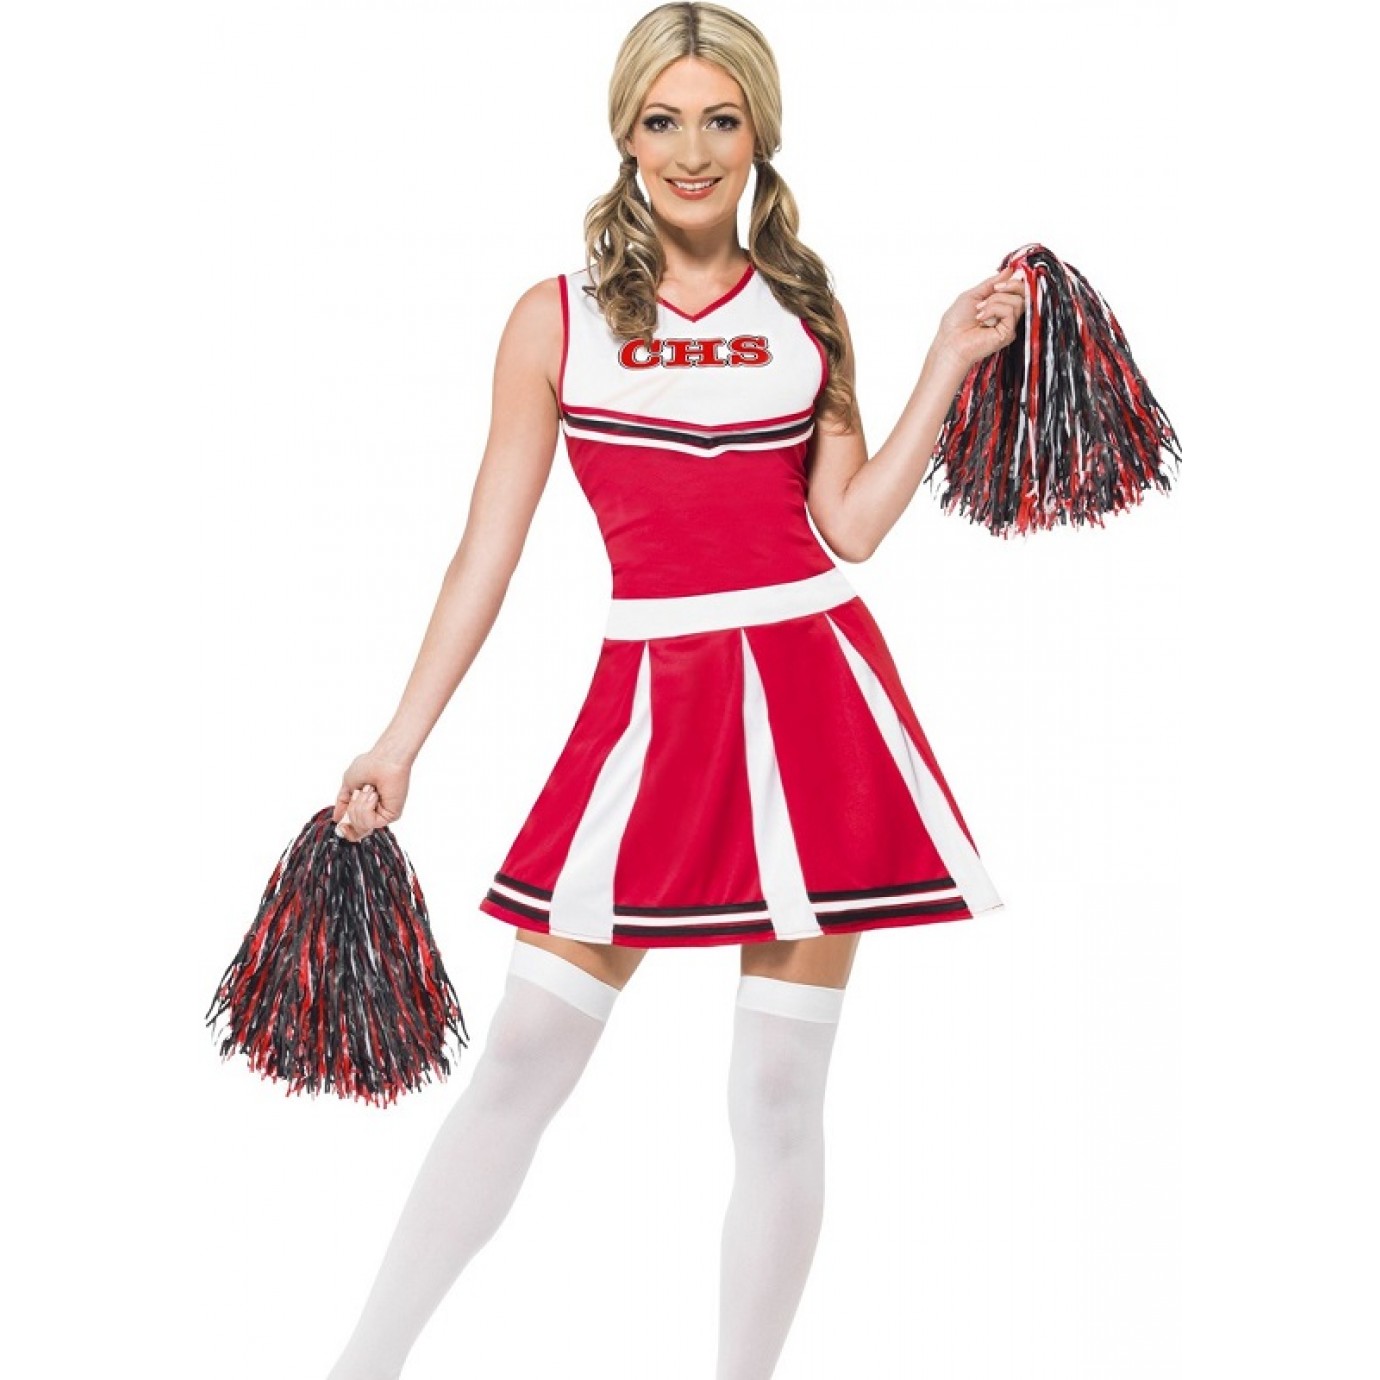 Legal Age Teenager cheerleader up petticoat